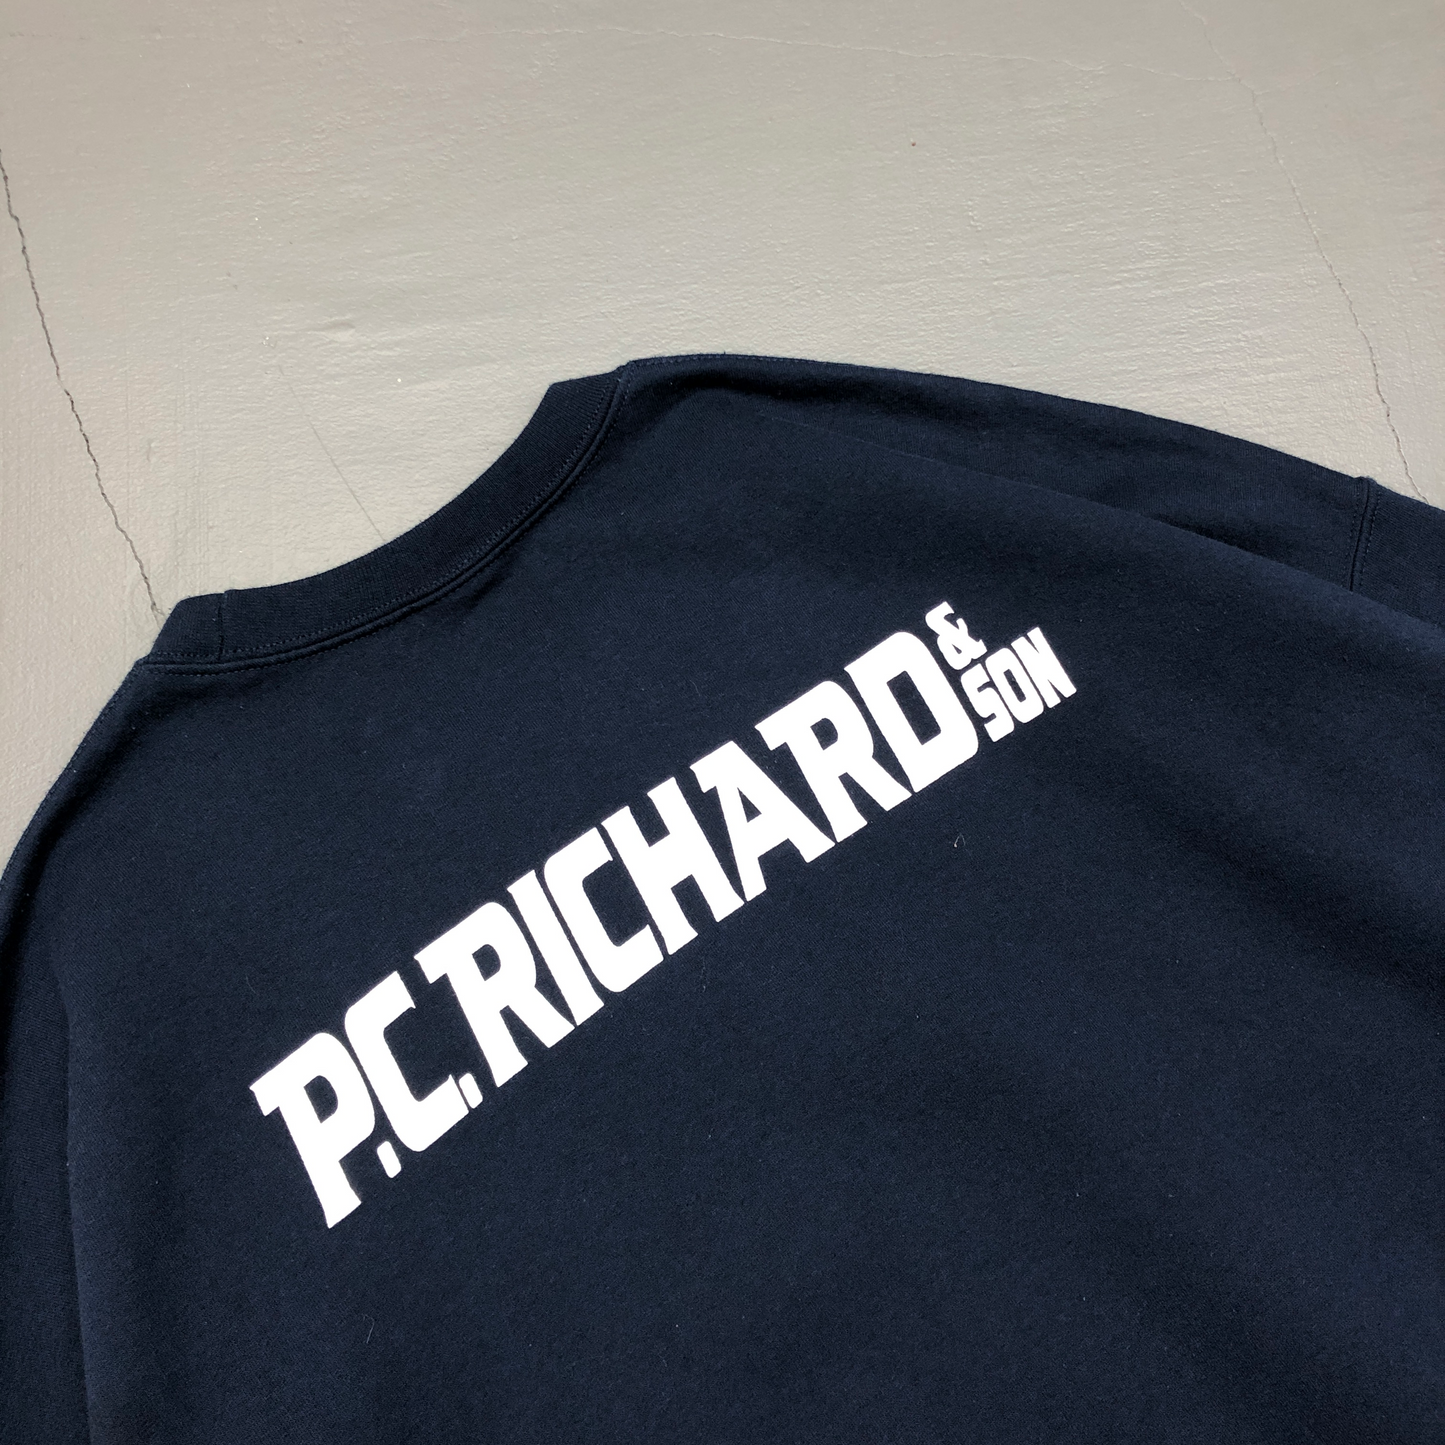 P.C. RICHARD & SON Staff Crewneck Sweatshirt